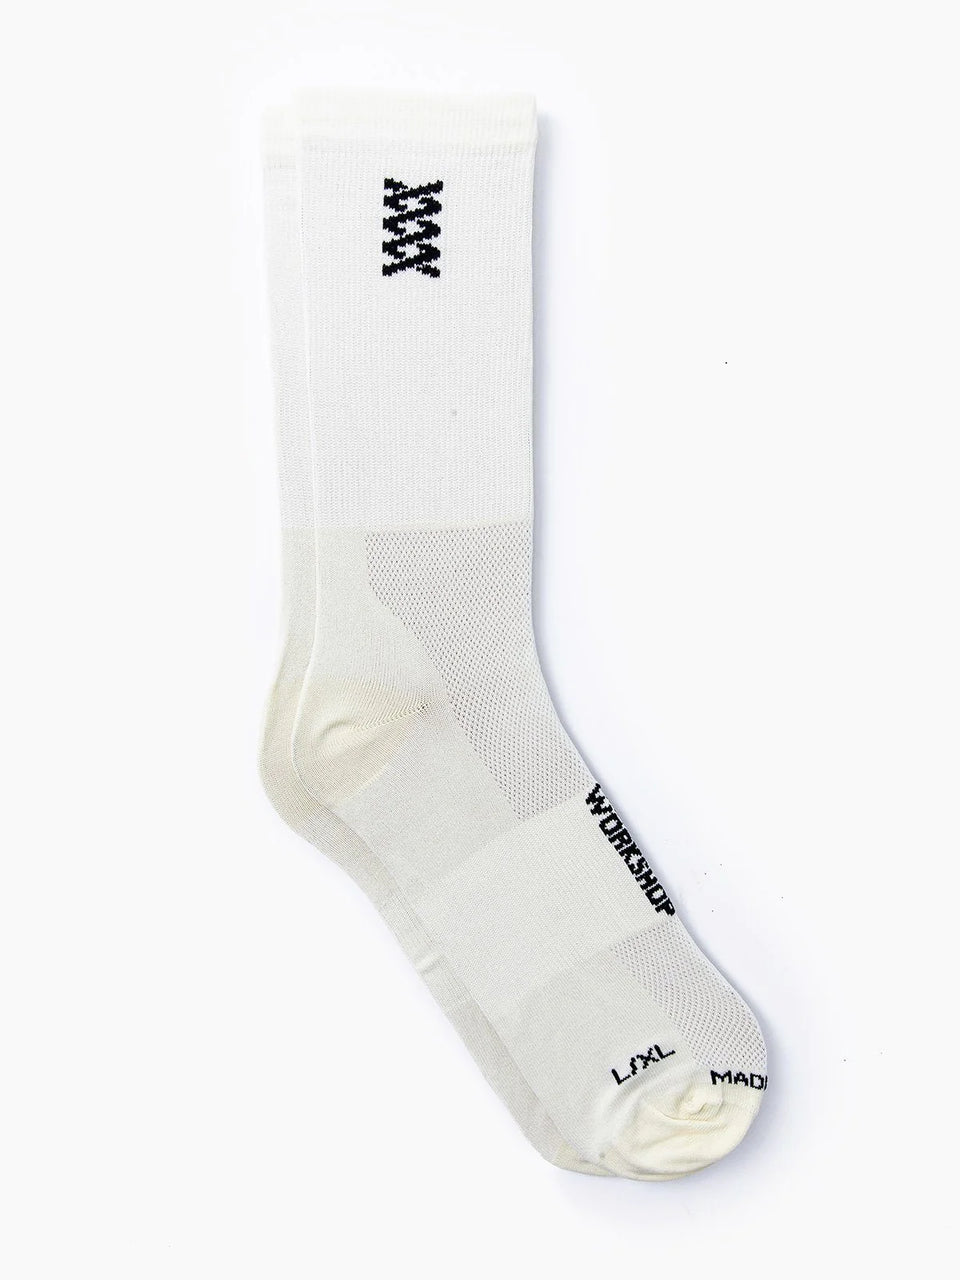 Mission Pro Socks